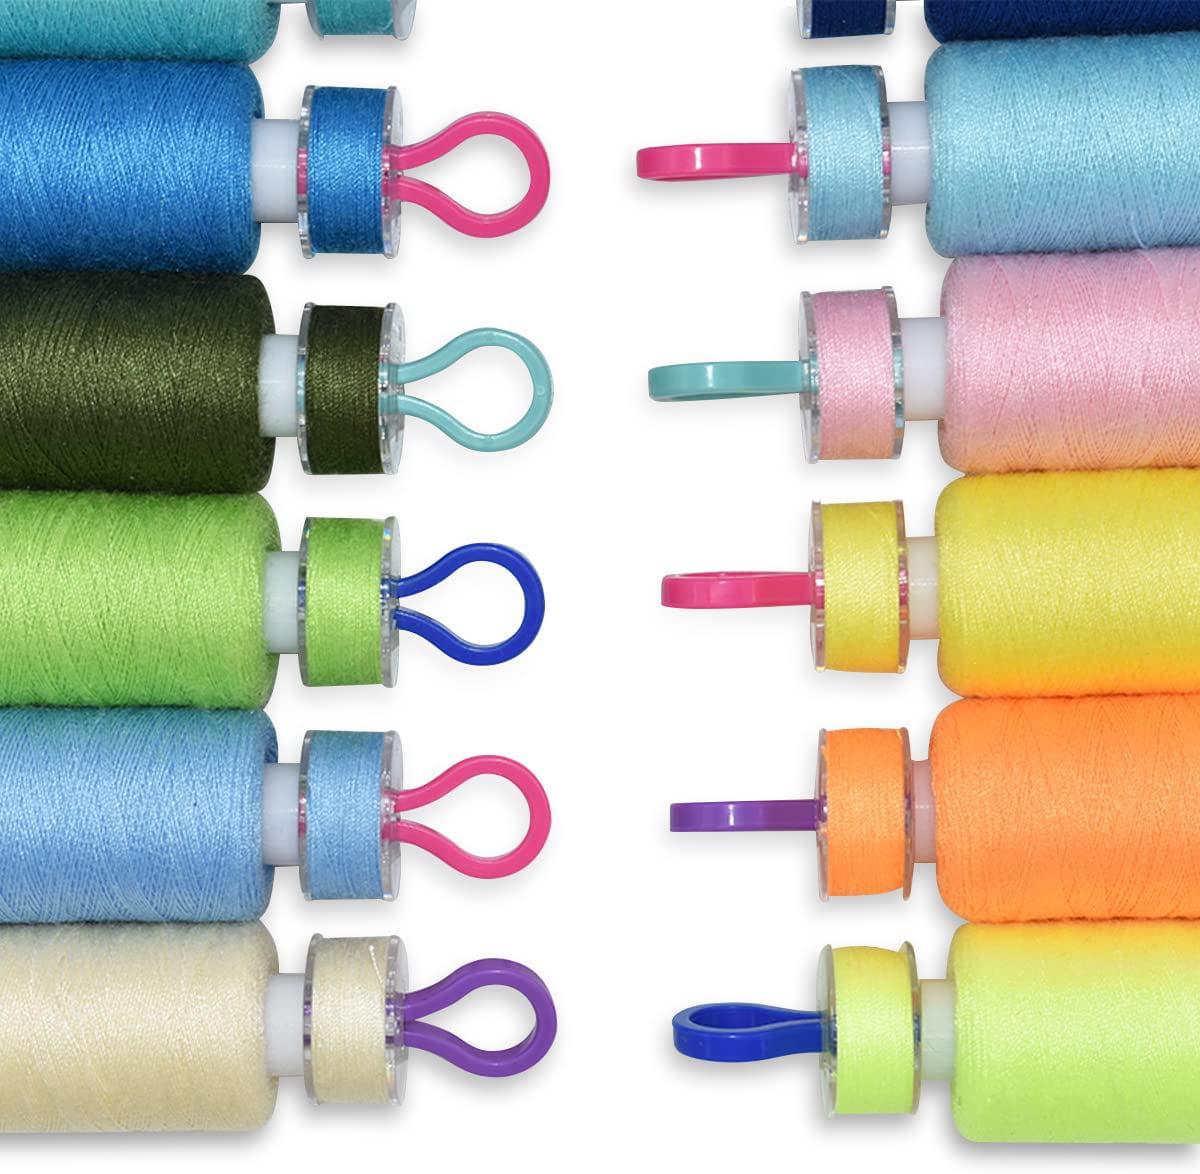 Bobbin Buddies,Willstar 60pcs Colorful Bobbin Thread Holders Thread Buddies Clips Sewing Machine Accessories for Thread Spool Organizing Bobbin Thread